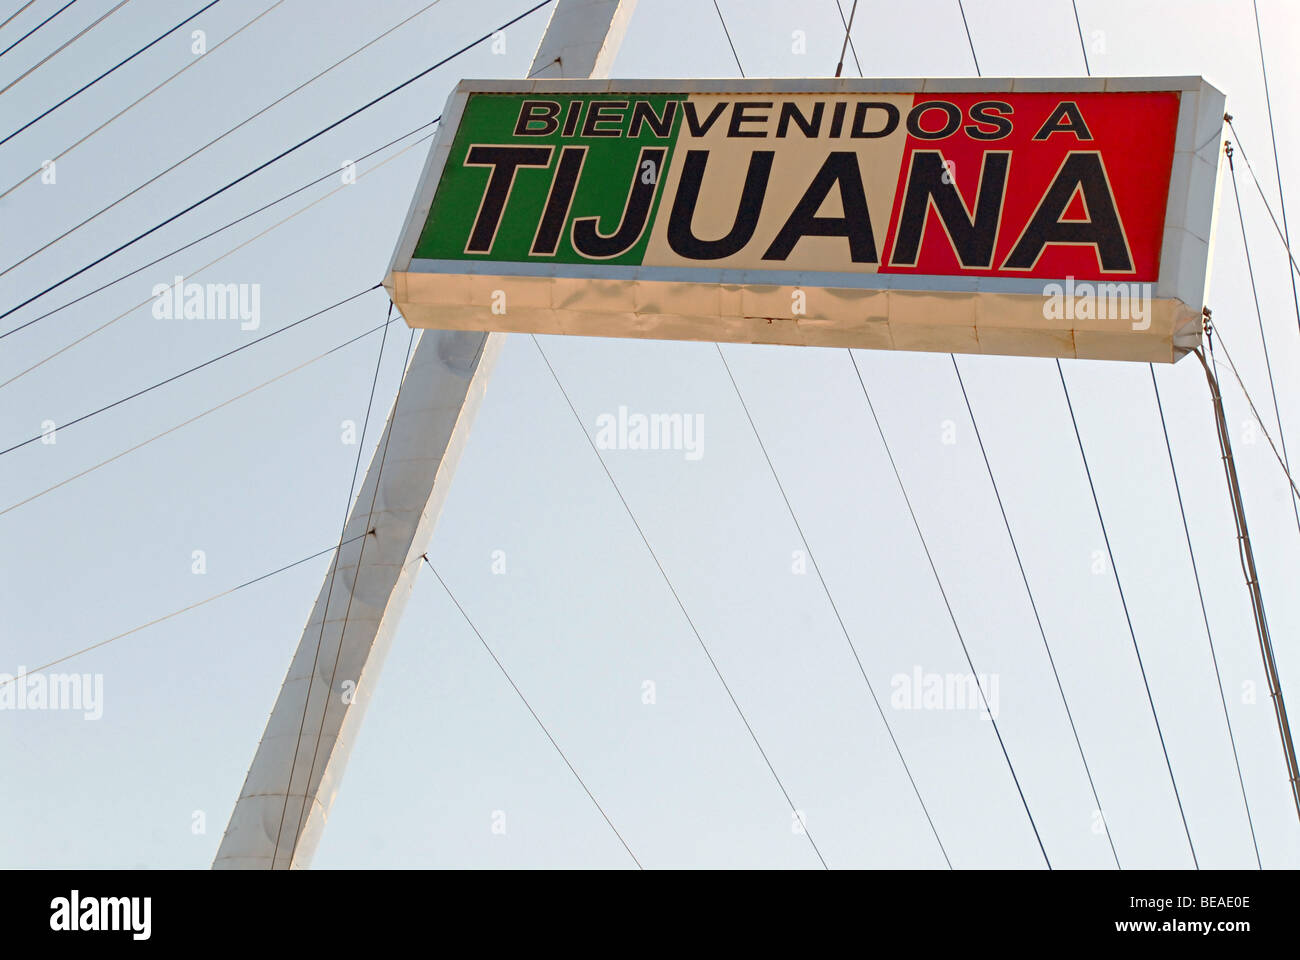 Bienvenidos a Tijuana – Welcome to Tijuana Mexico Stock Photo